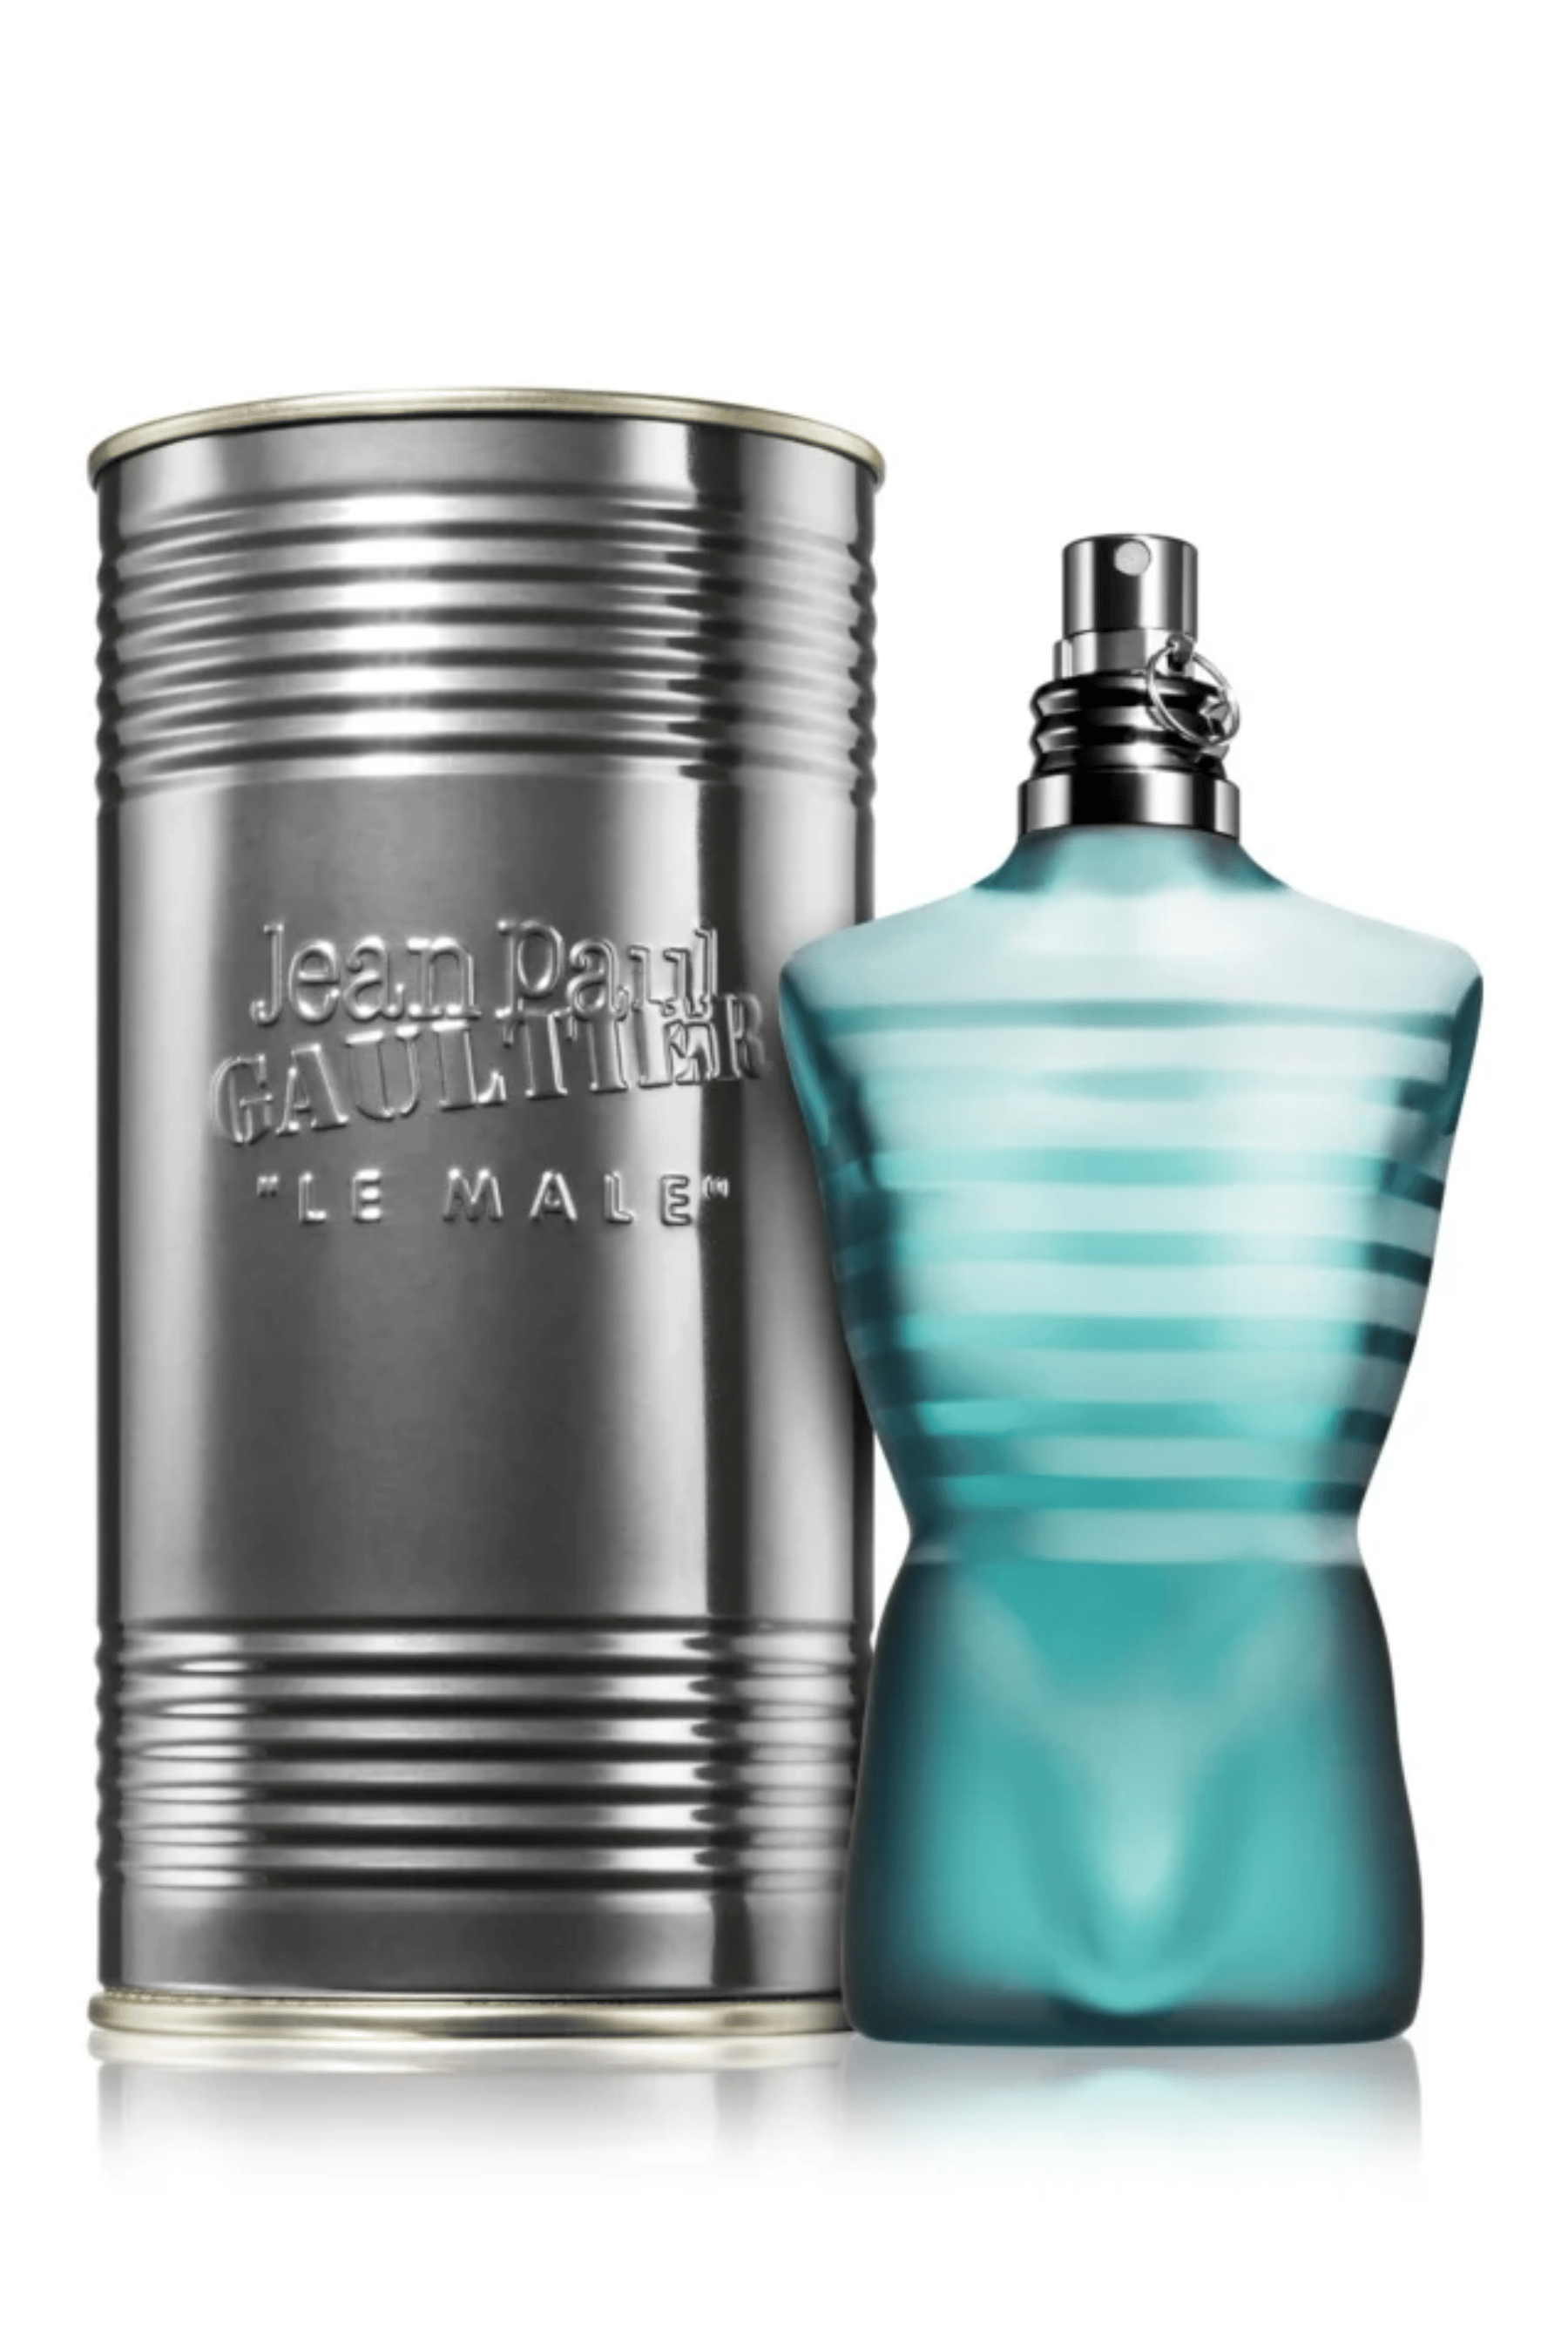 Jean Paul Gaultier Le Male Men, EDT Spray - Men's Perfume - Miles Kimball